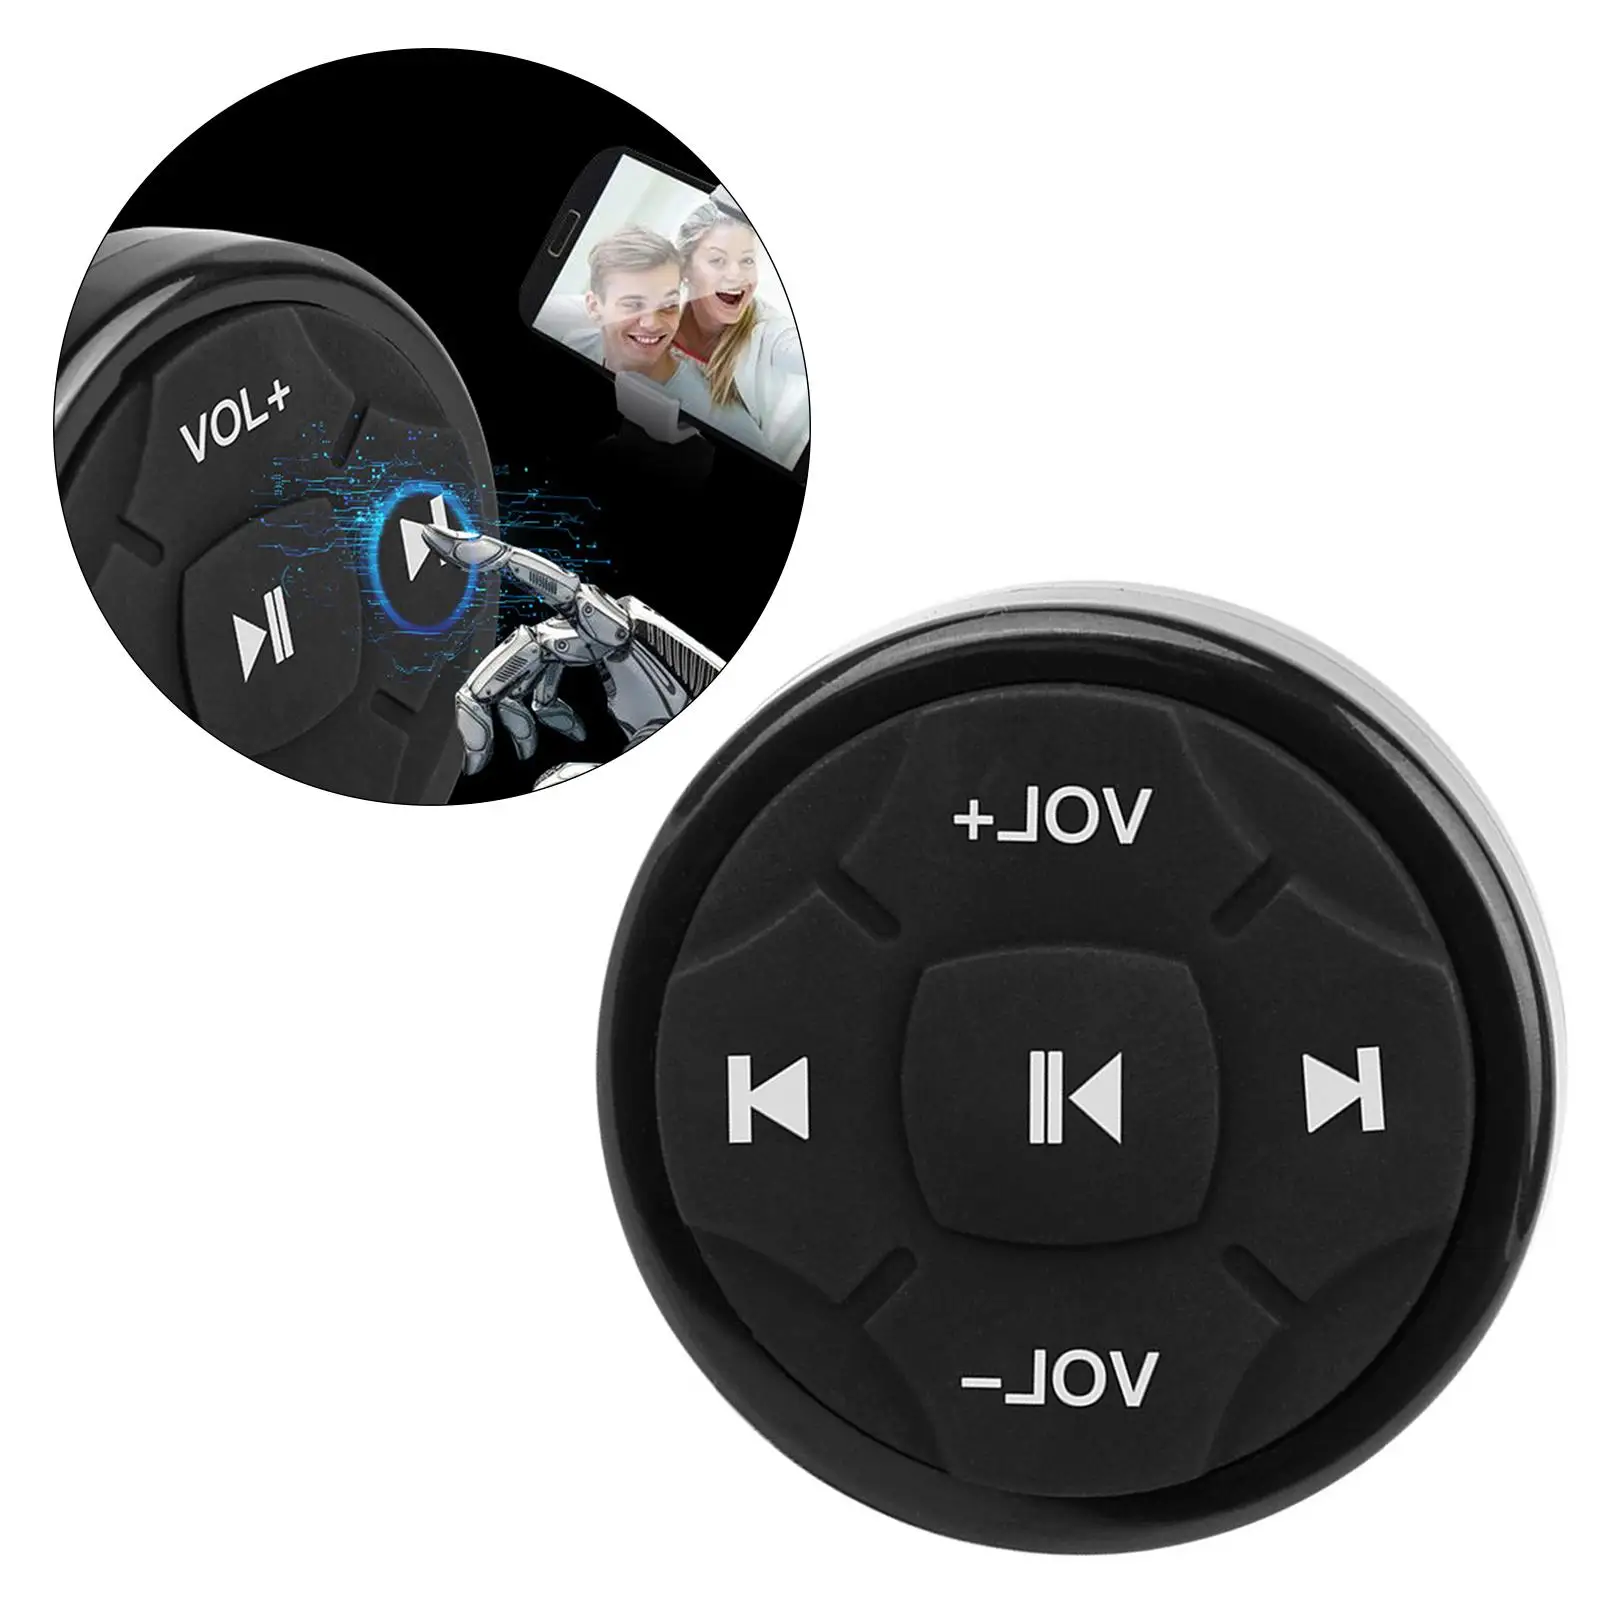 Bluetooth Wheel Wireless Remote Control for Car